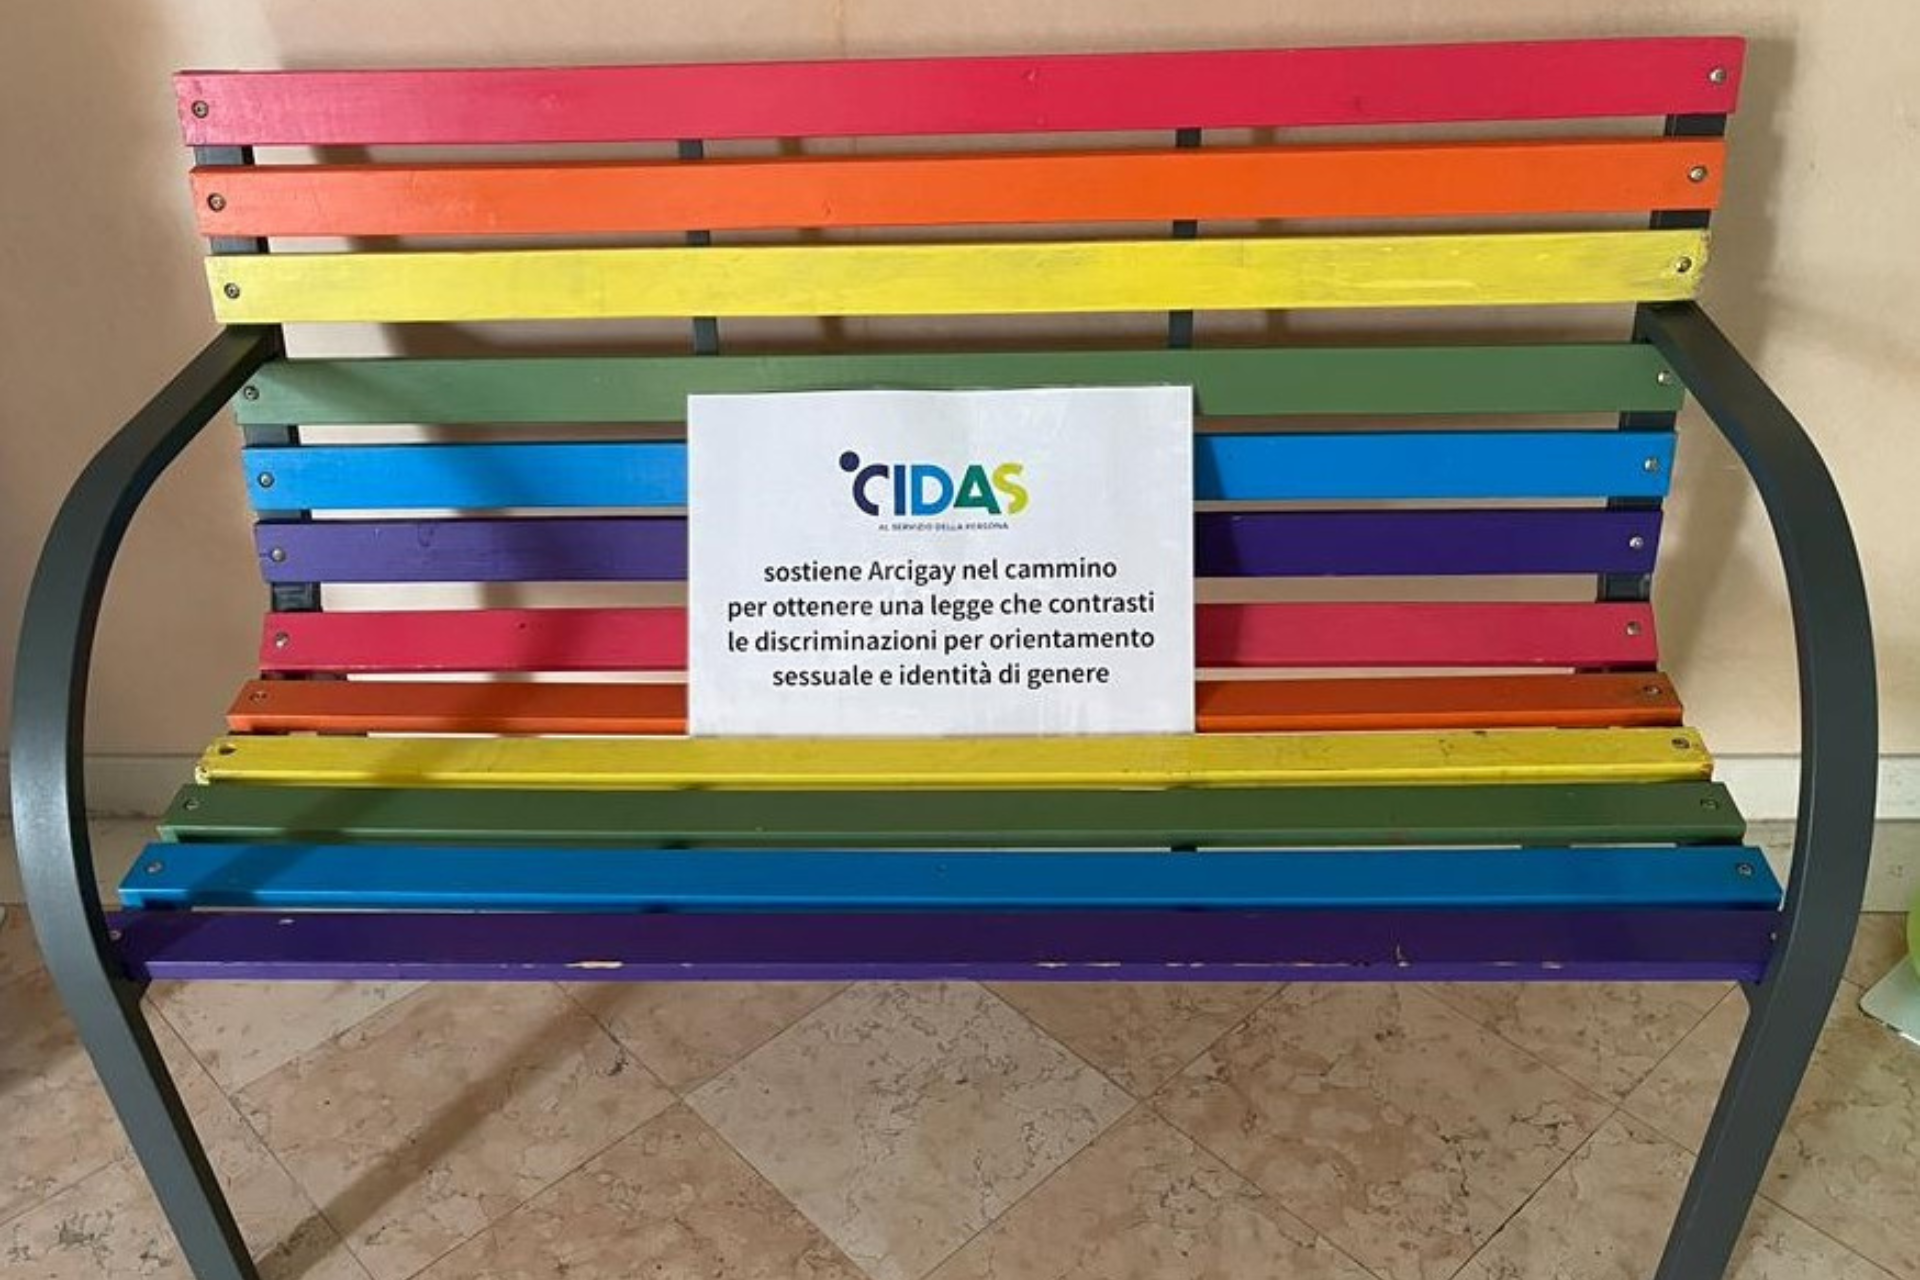 CIDAS nel mese del Pride ospita la panchina arcobaleno